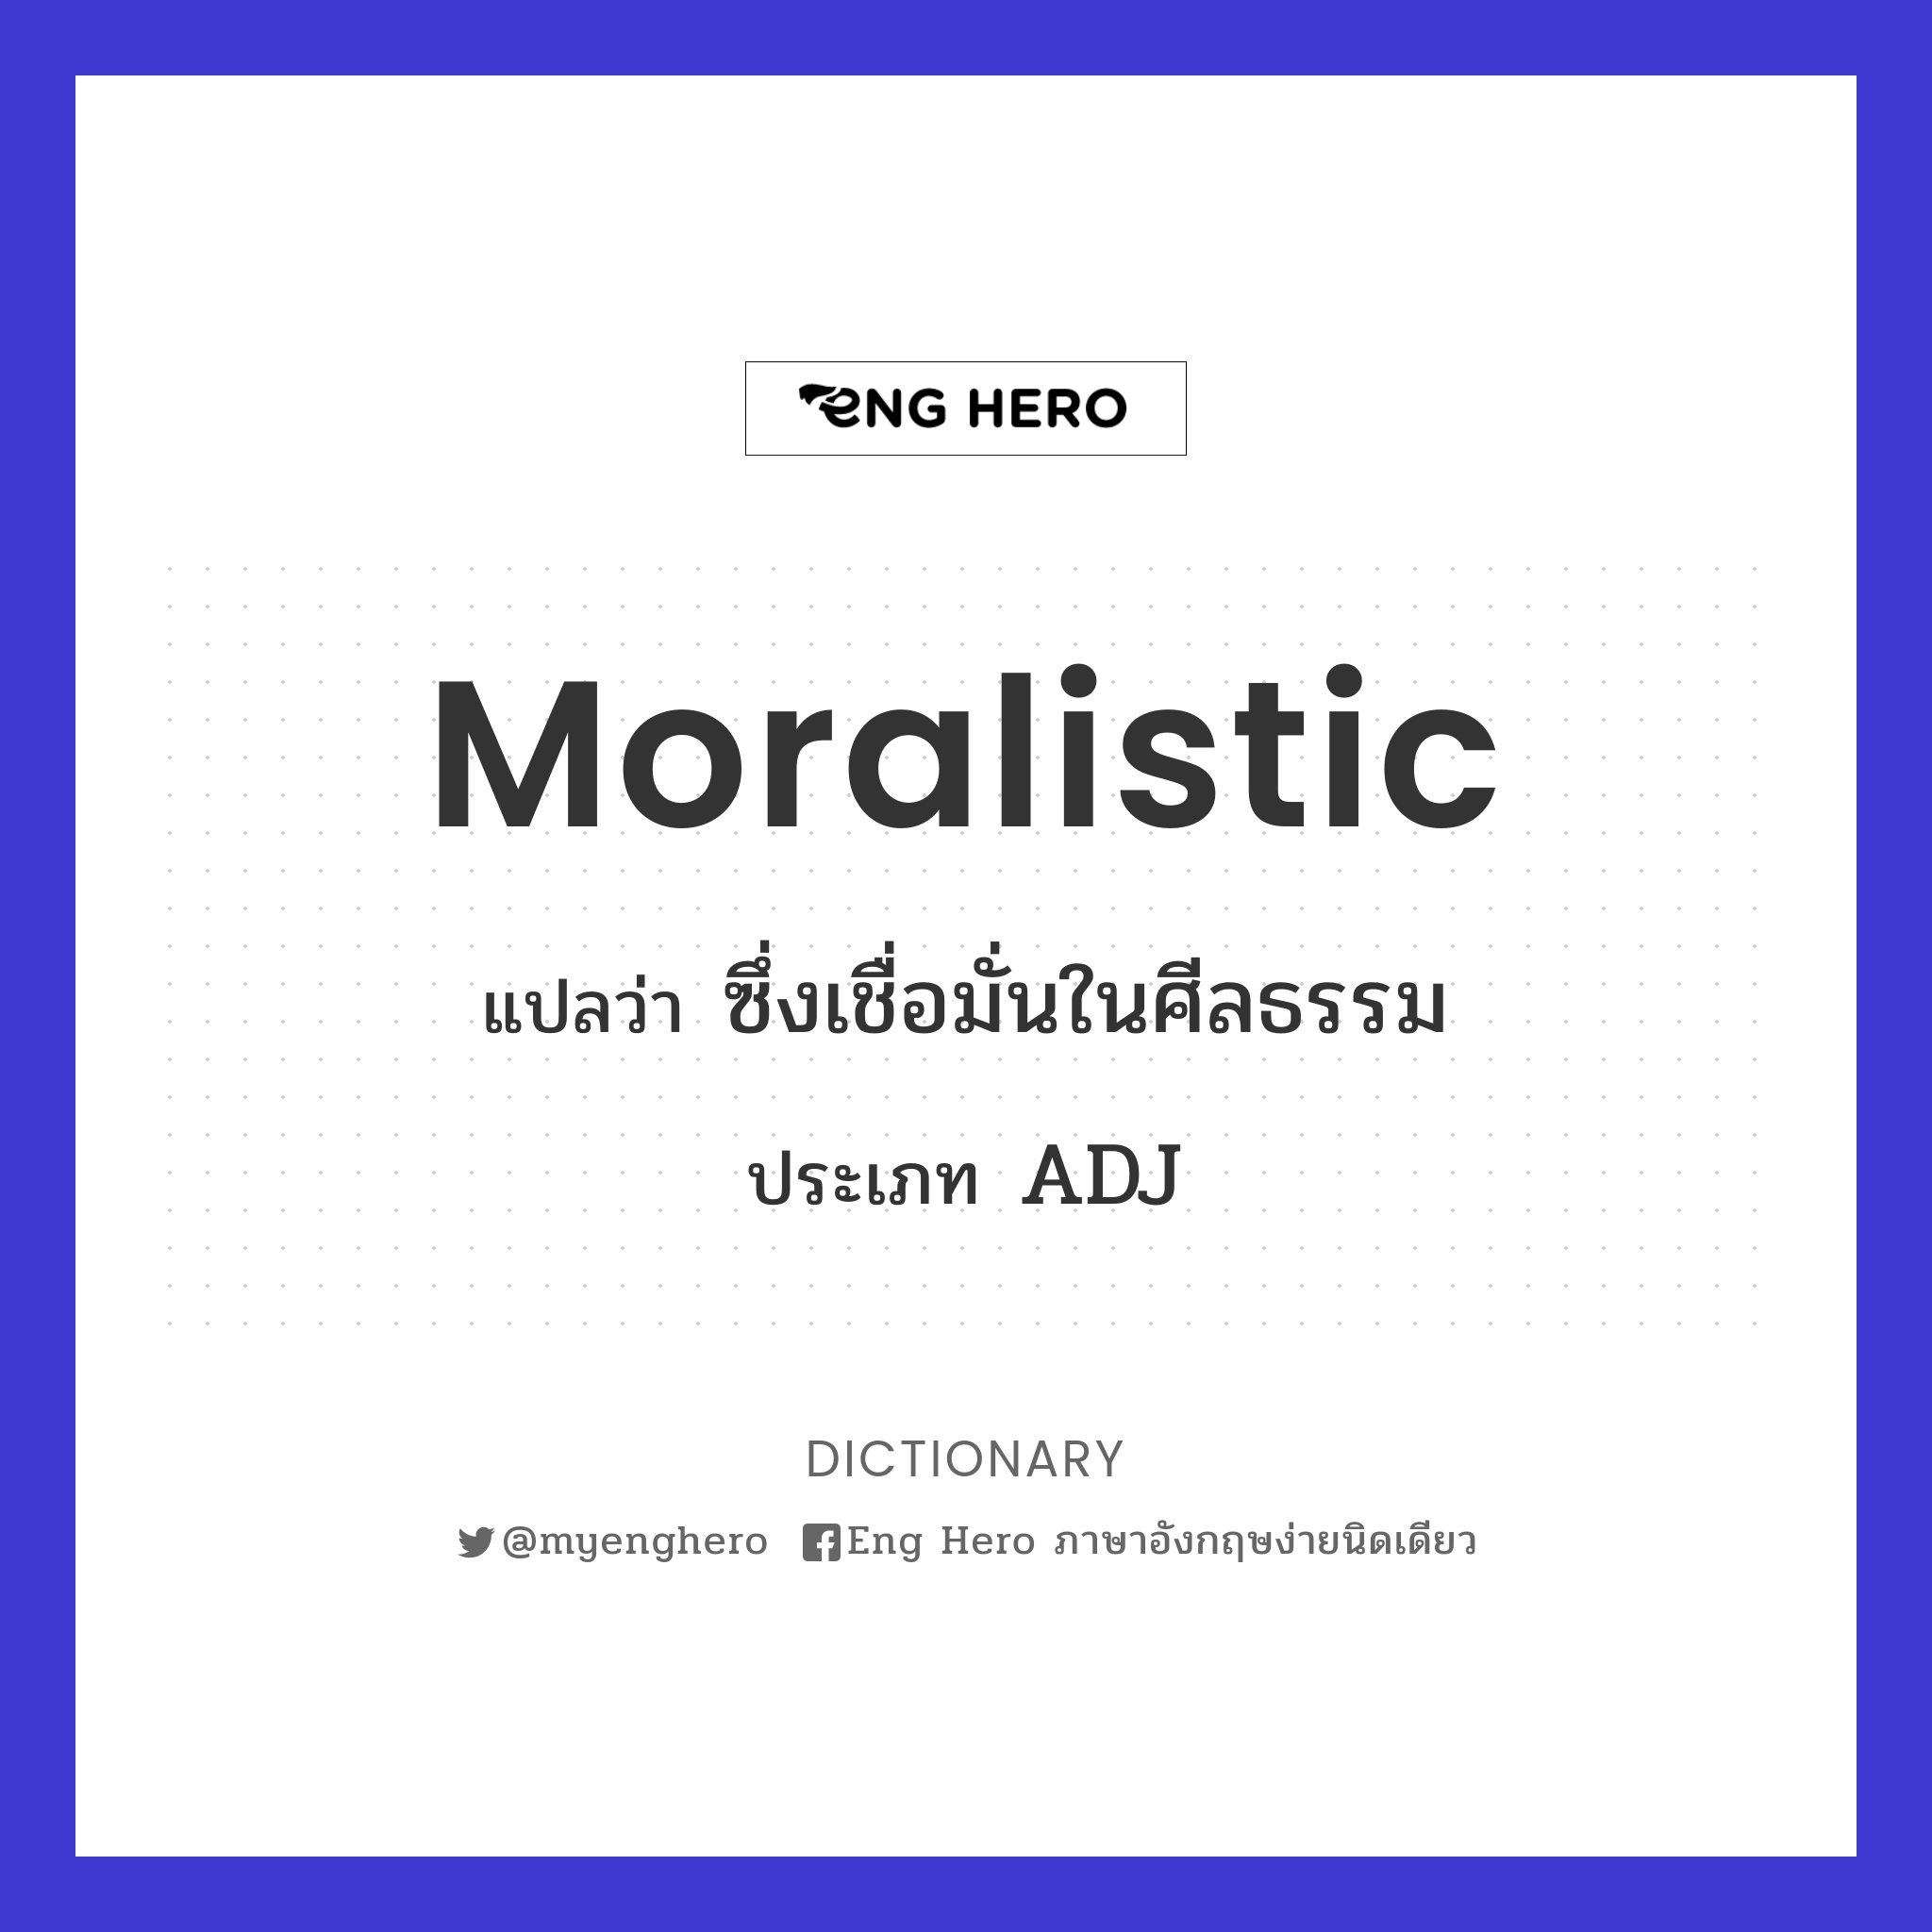 moralistic